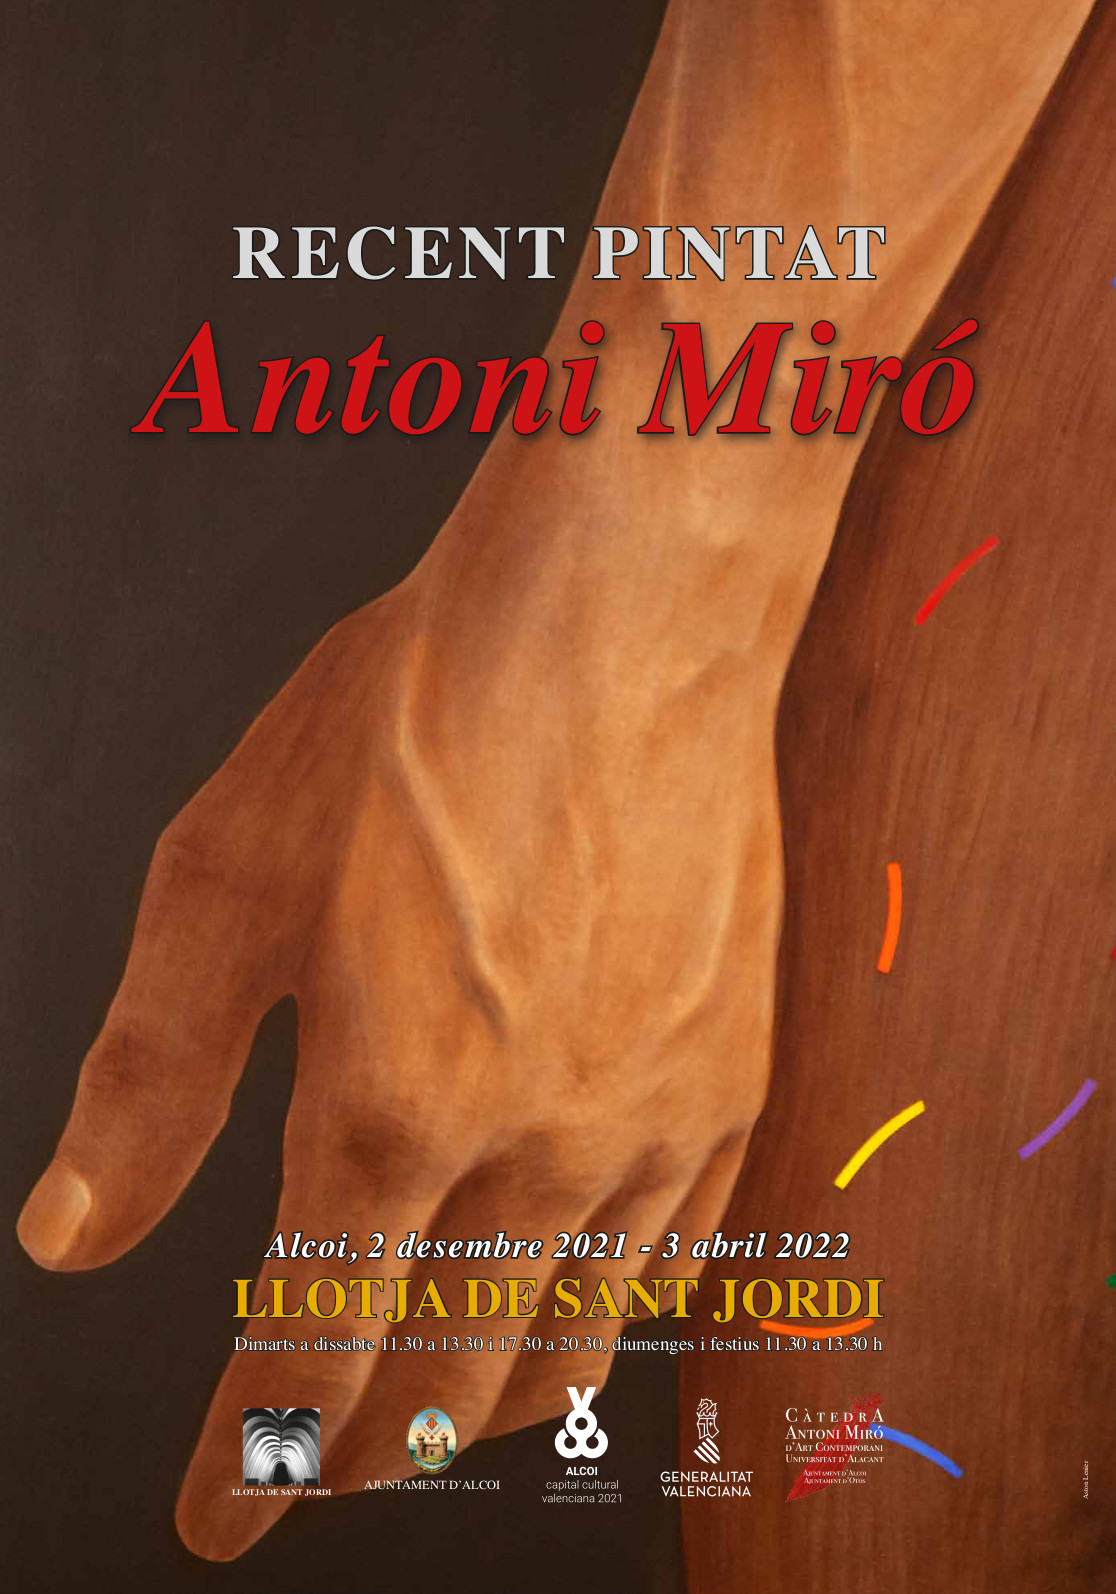 “RECENT PINTAT, Antoni Miró”